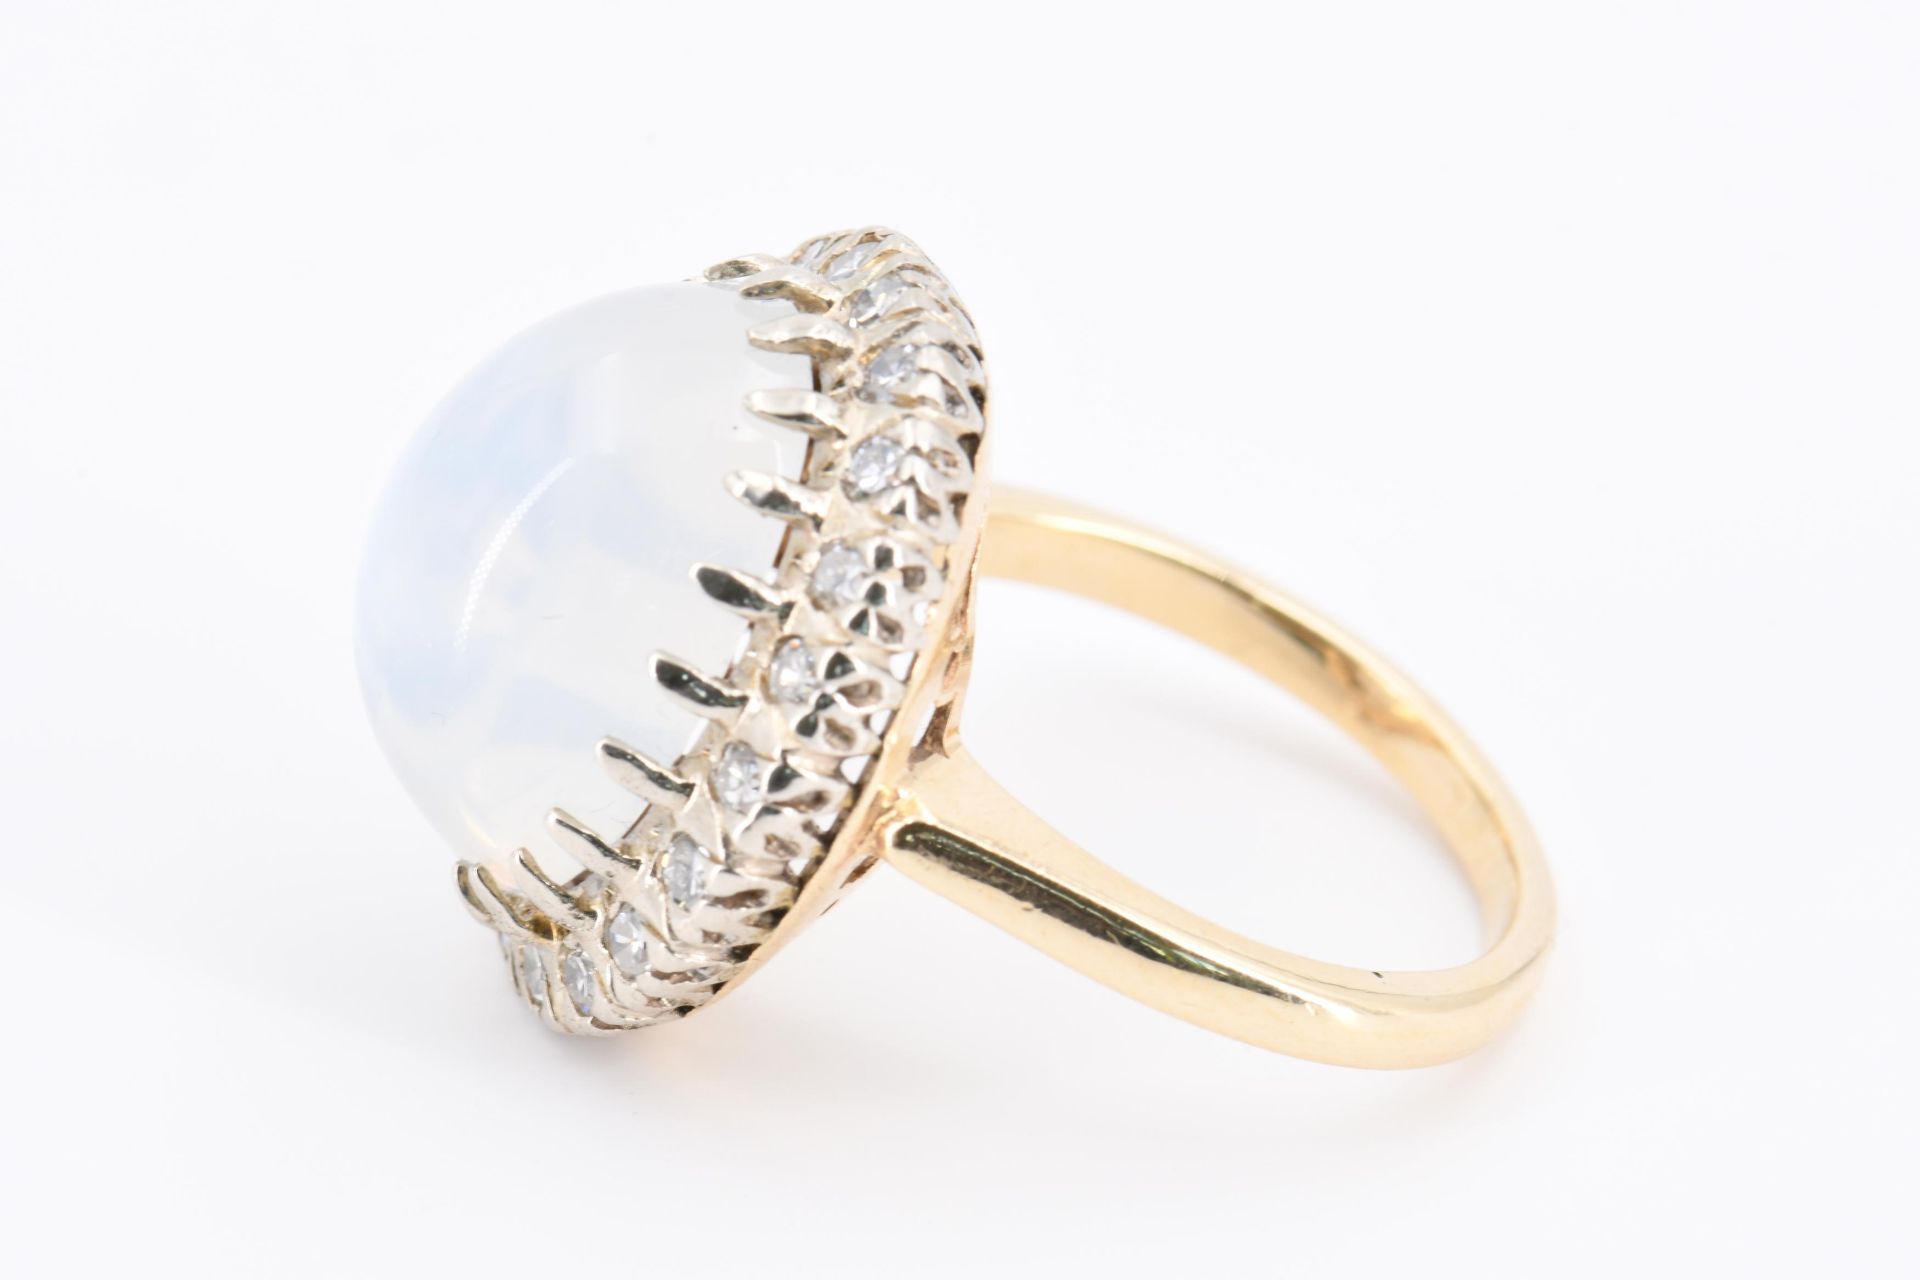 Moonstone Diamond Ring - Image 3 of 6